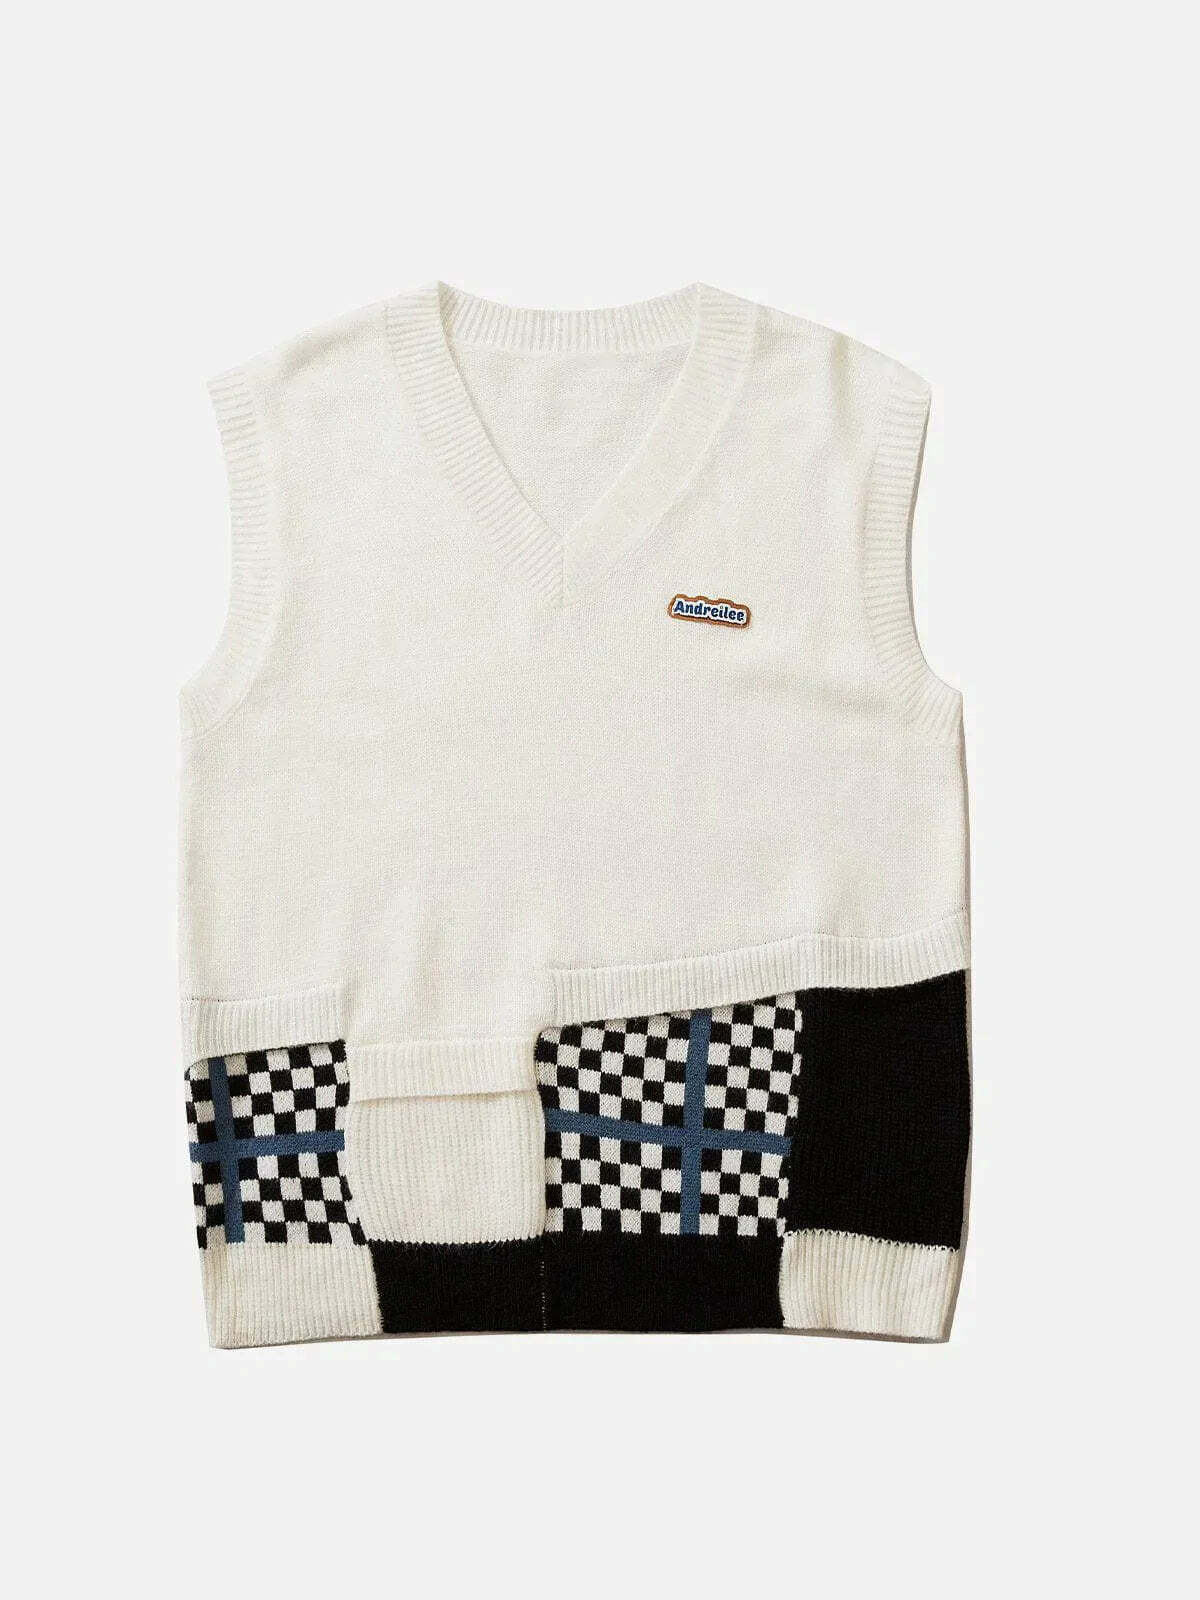 patchwork plaid sweater vest edgy & retro streetwear essential 6434